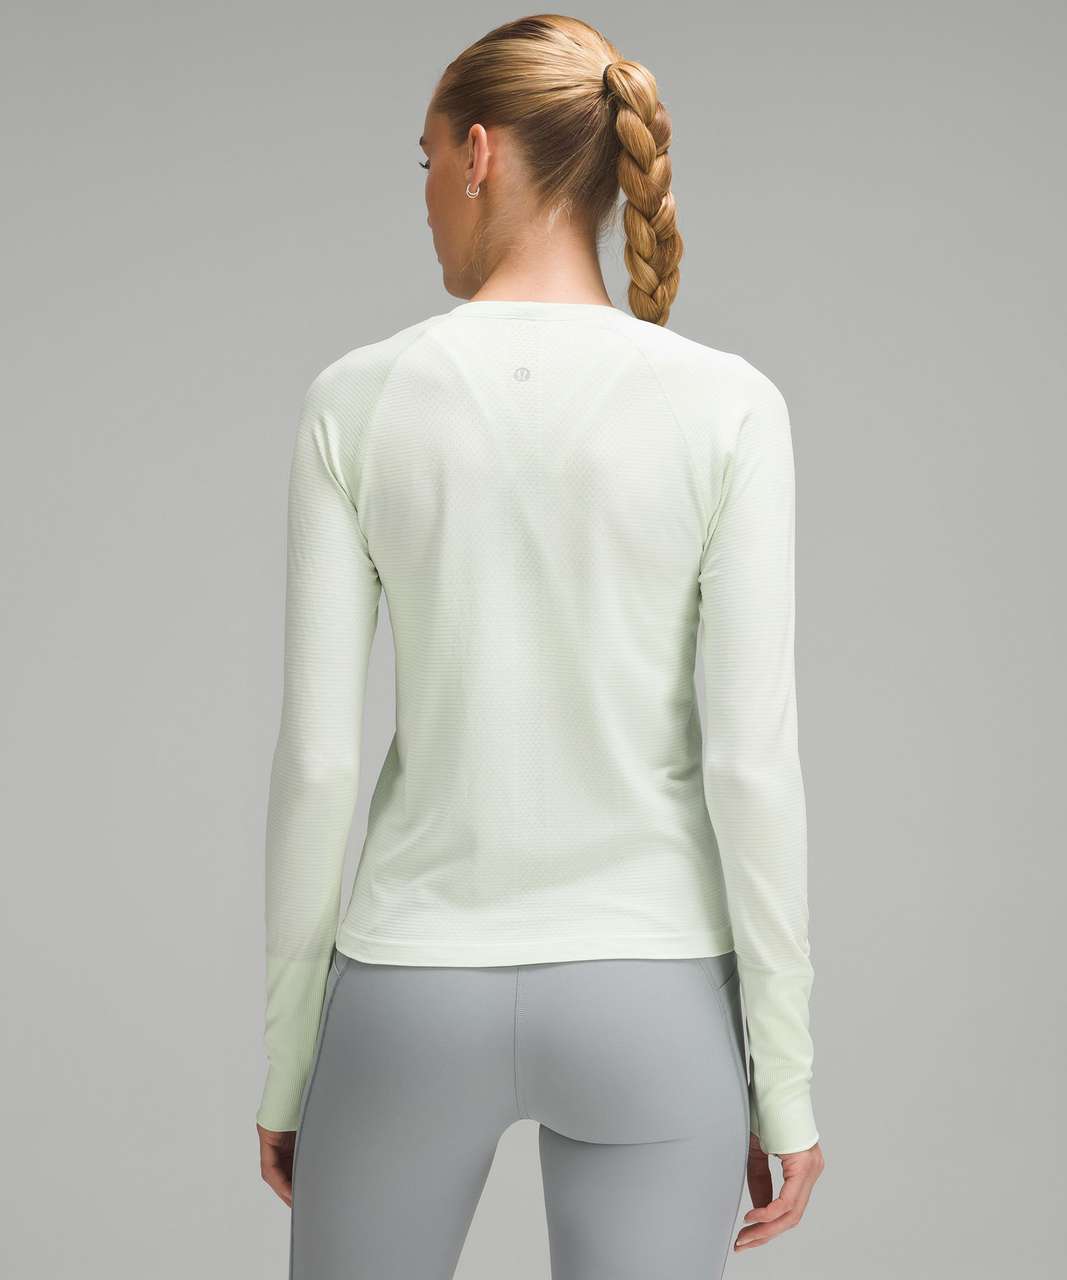 Lululemon Swiftly Tech Long-Sleeve Shirt 2.0 *Race Length - Kohlrabi Green / White